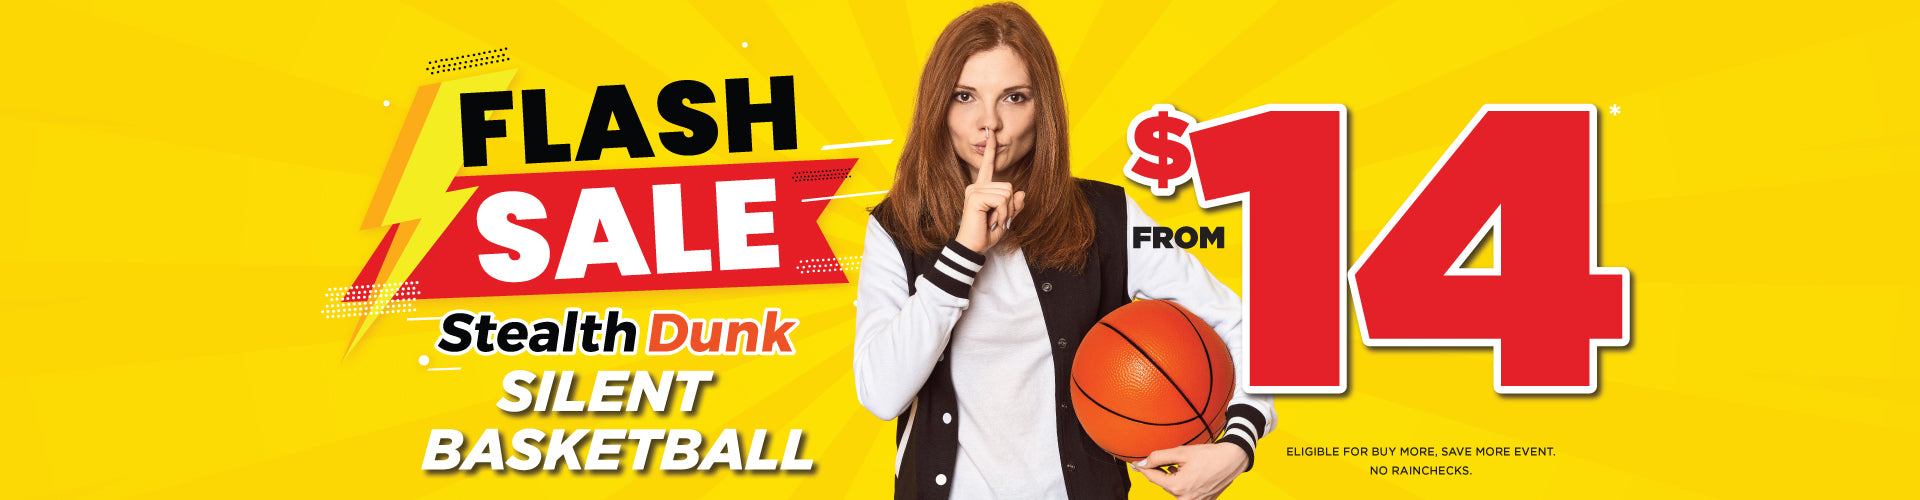 Stealth Dunk Silent Basketball Flash Sale